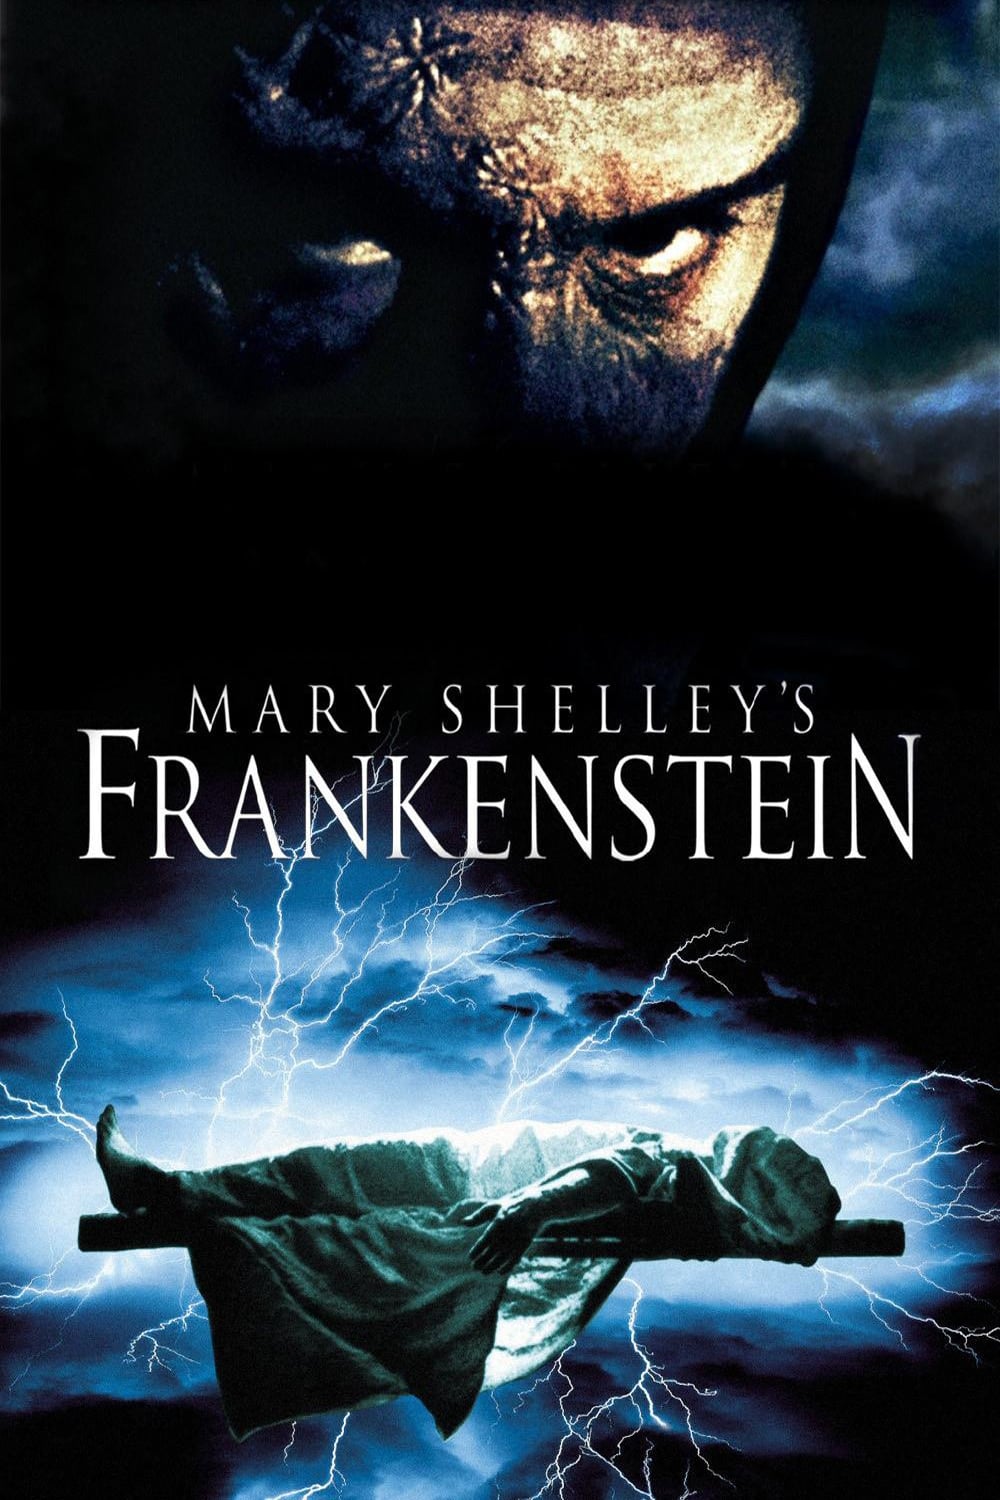 Frankenstein de Mary Shelley (1994)